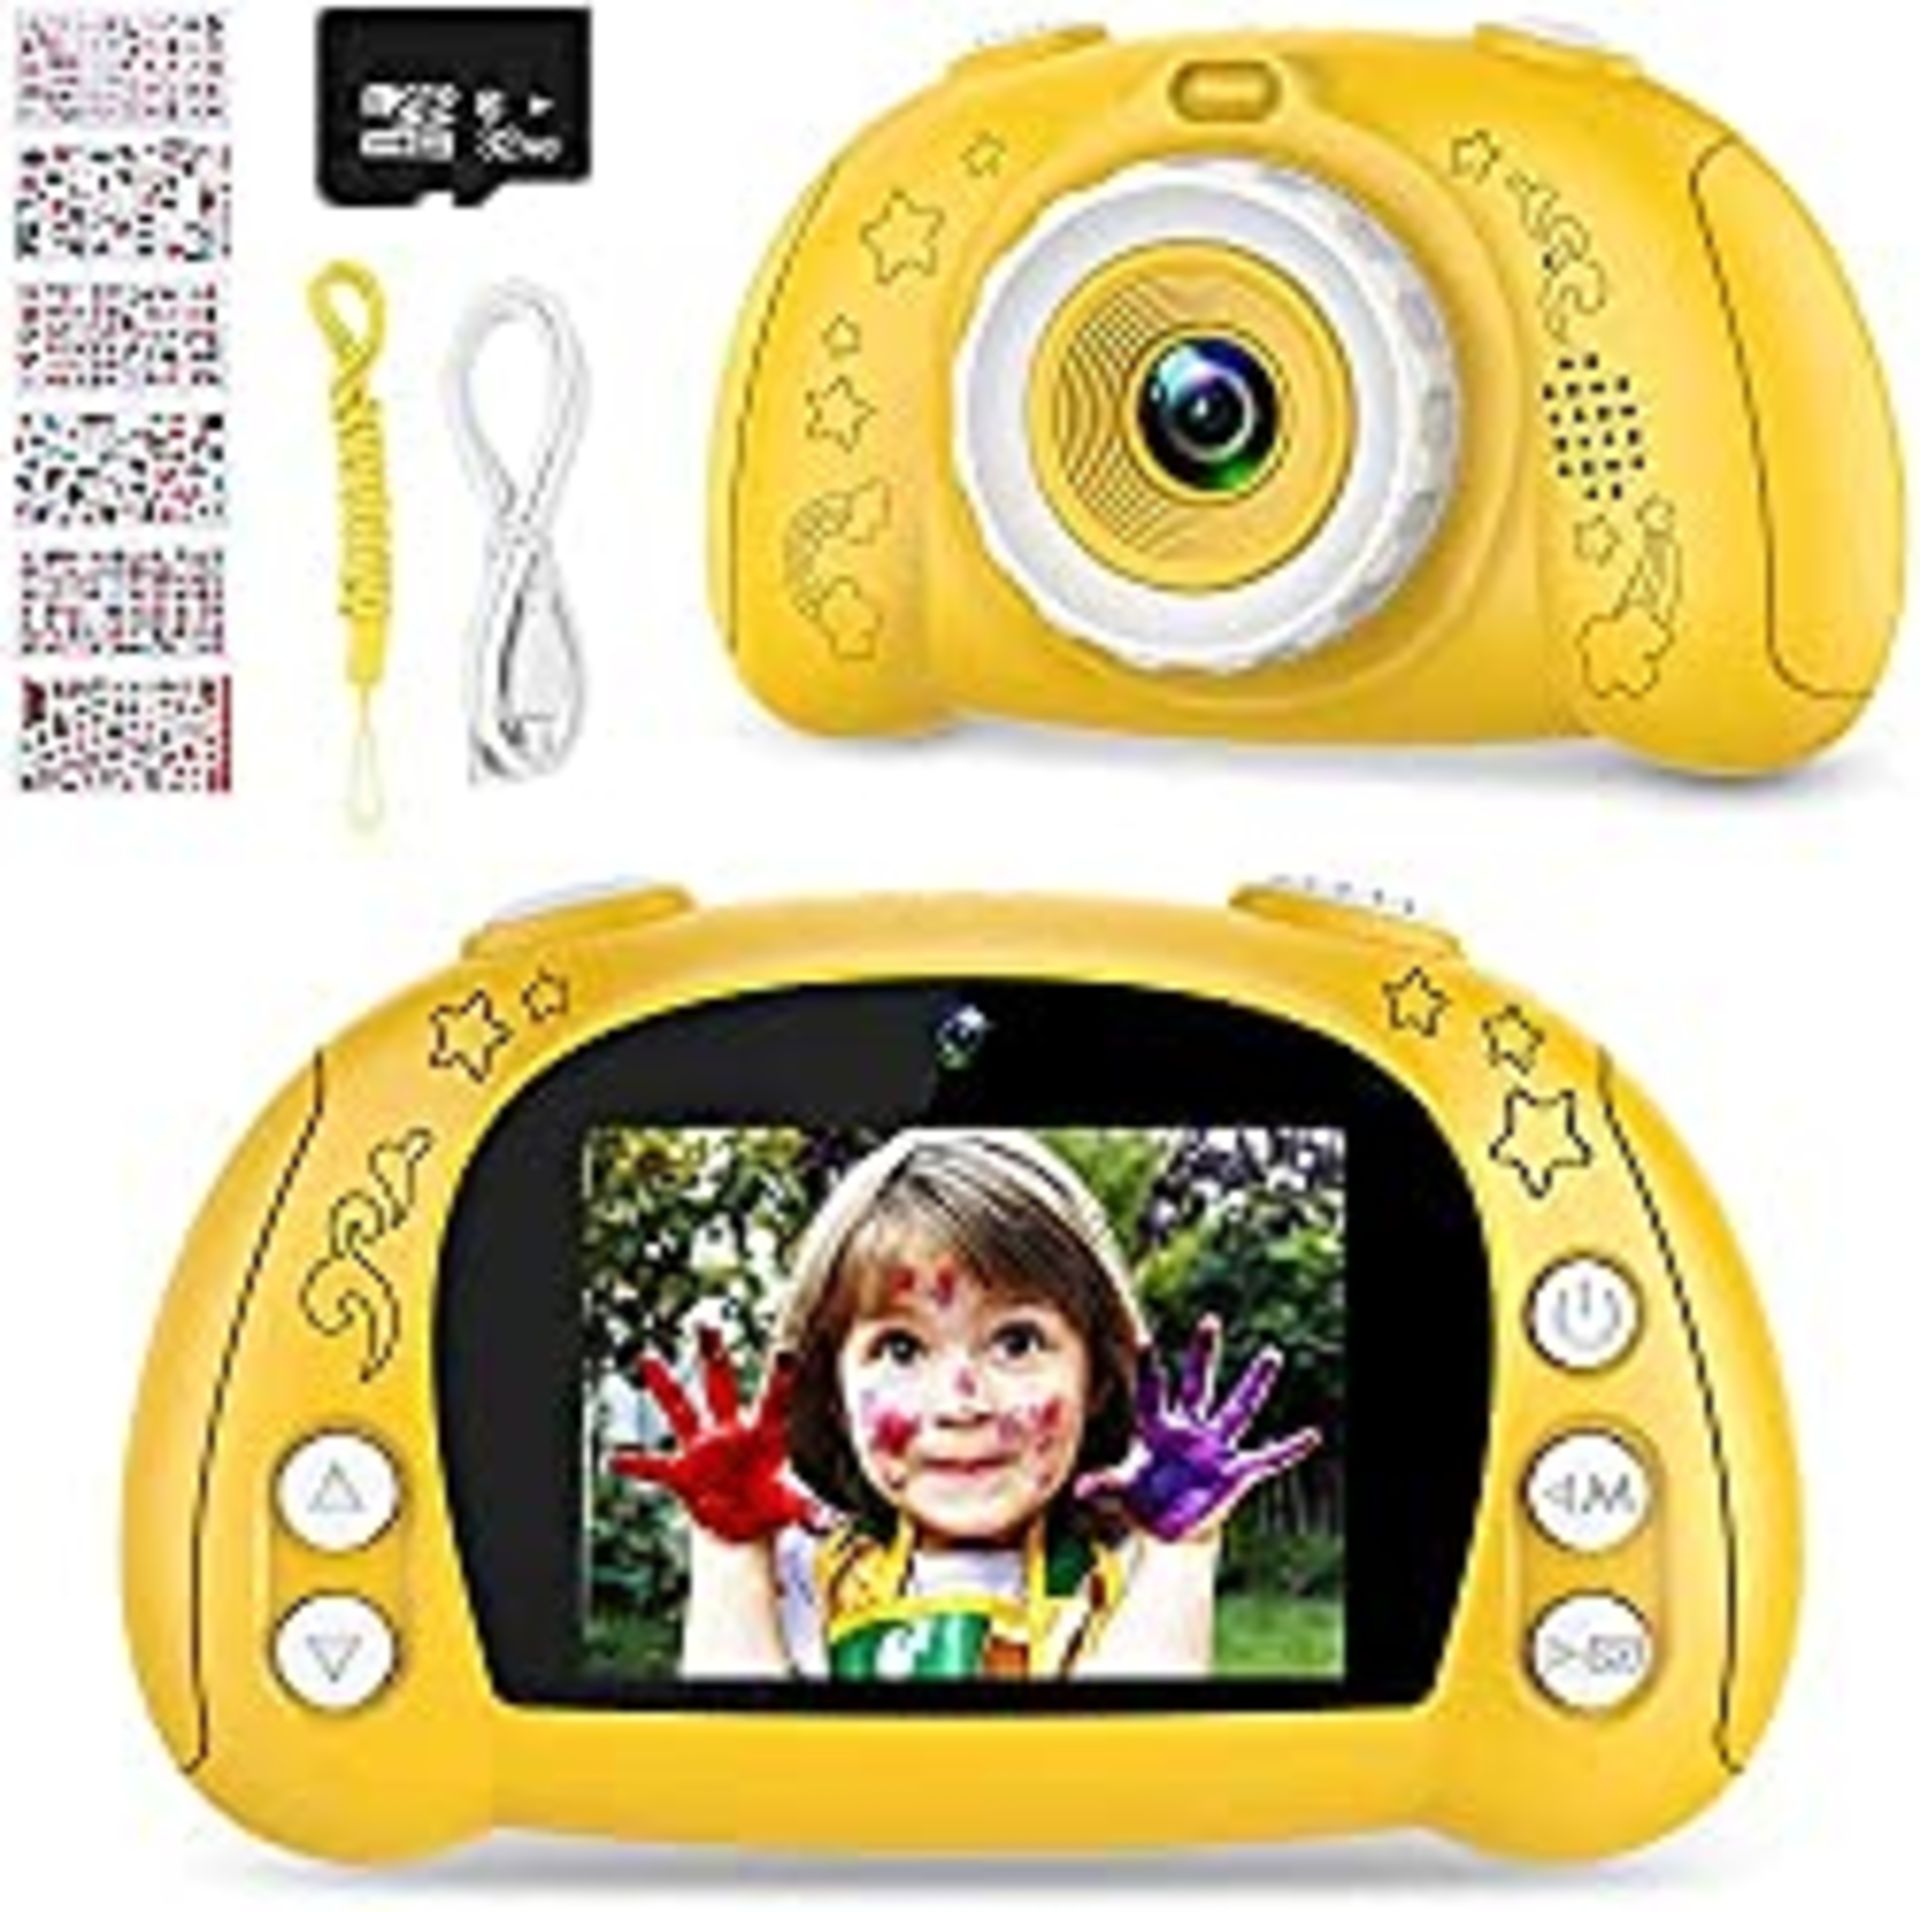 RRP £33.98 WOWGO Kids Camera Toy Toddler Digital Camera Video